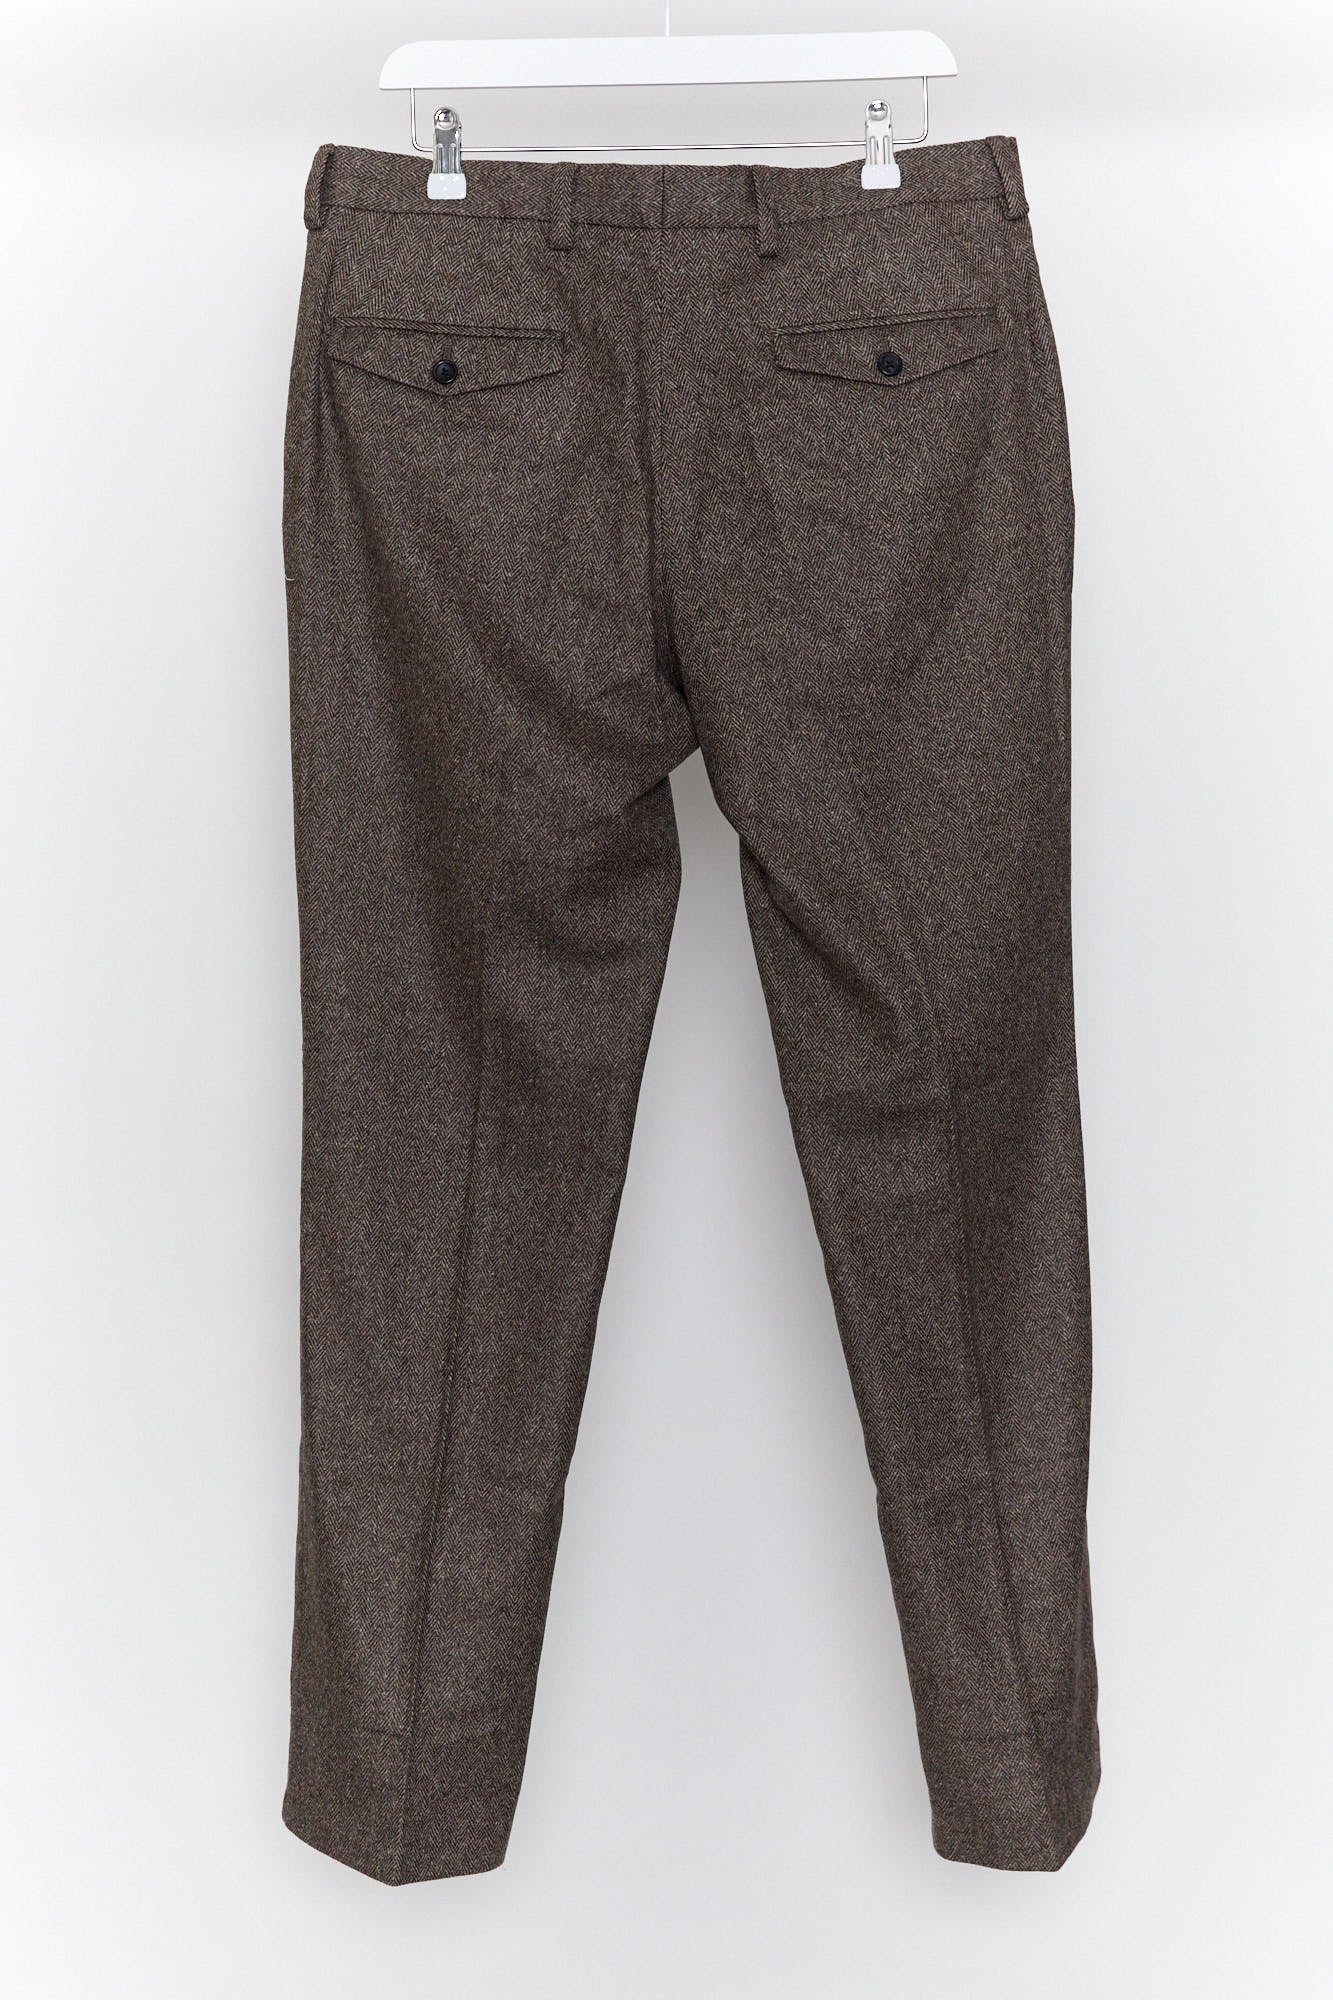 Mens Next Brown Tweed Suit Trouser: W34 L31